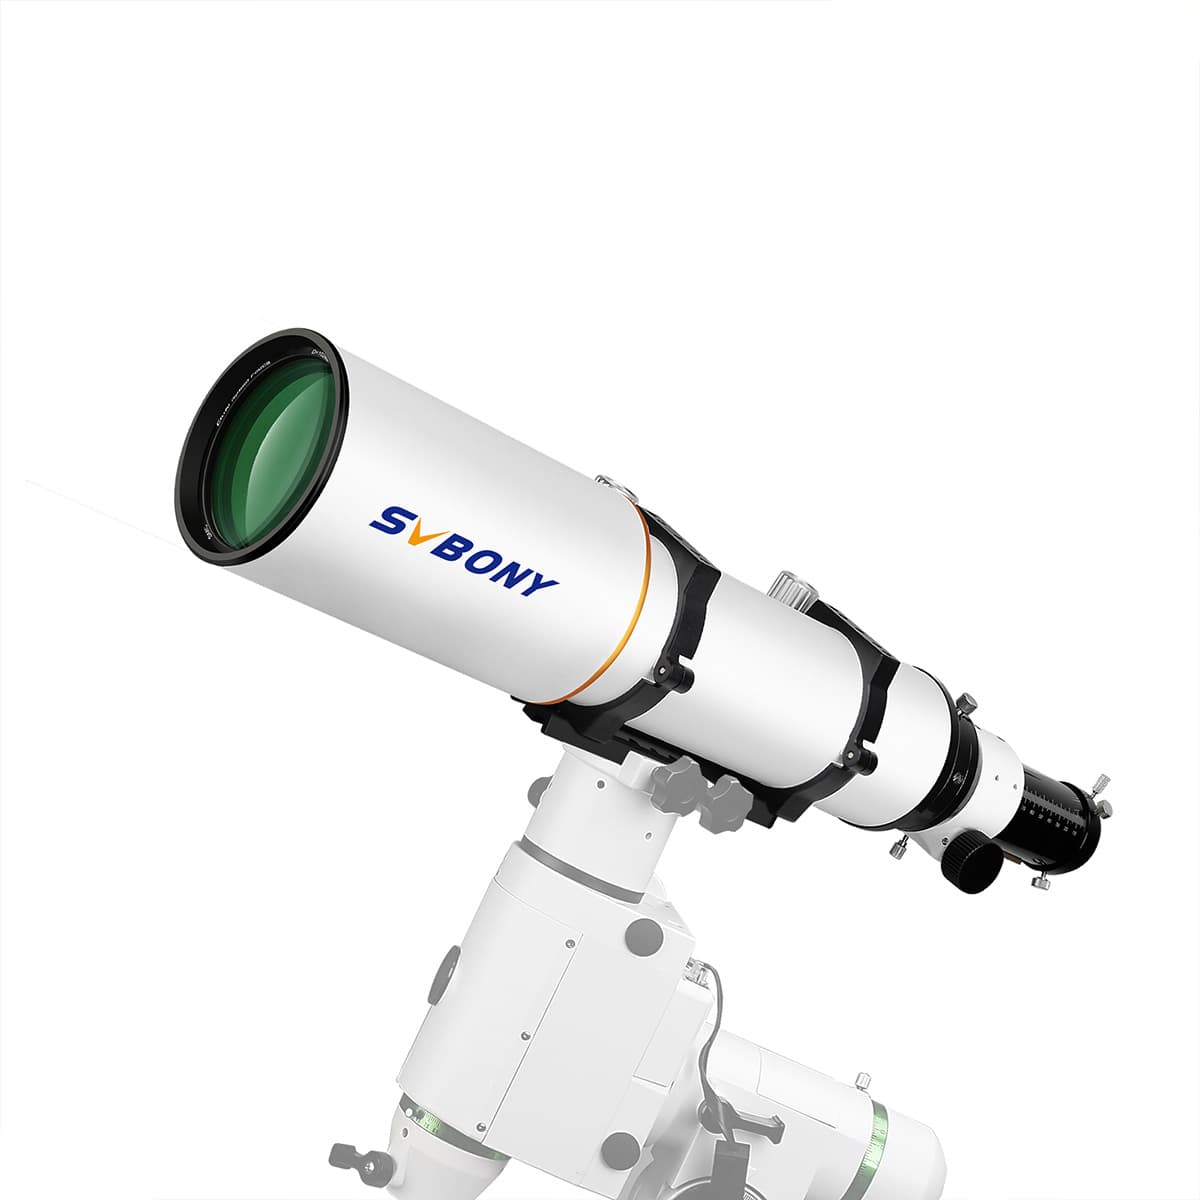 SVBONY SV503 天体望遠鏡 屈折式 望遠鏡 高倍率 口径80mm EDガラス 焦点距離560mm OTA 鏡筒のみ 学研 キャンプ 天 